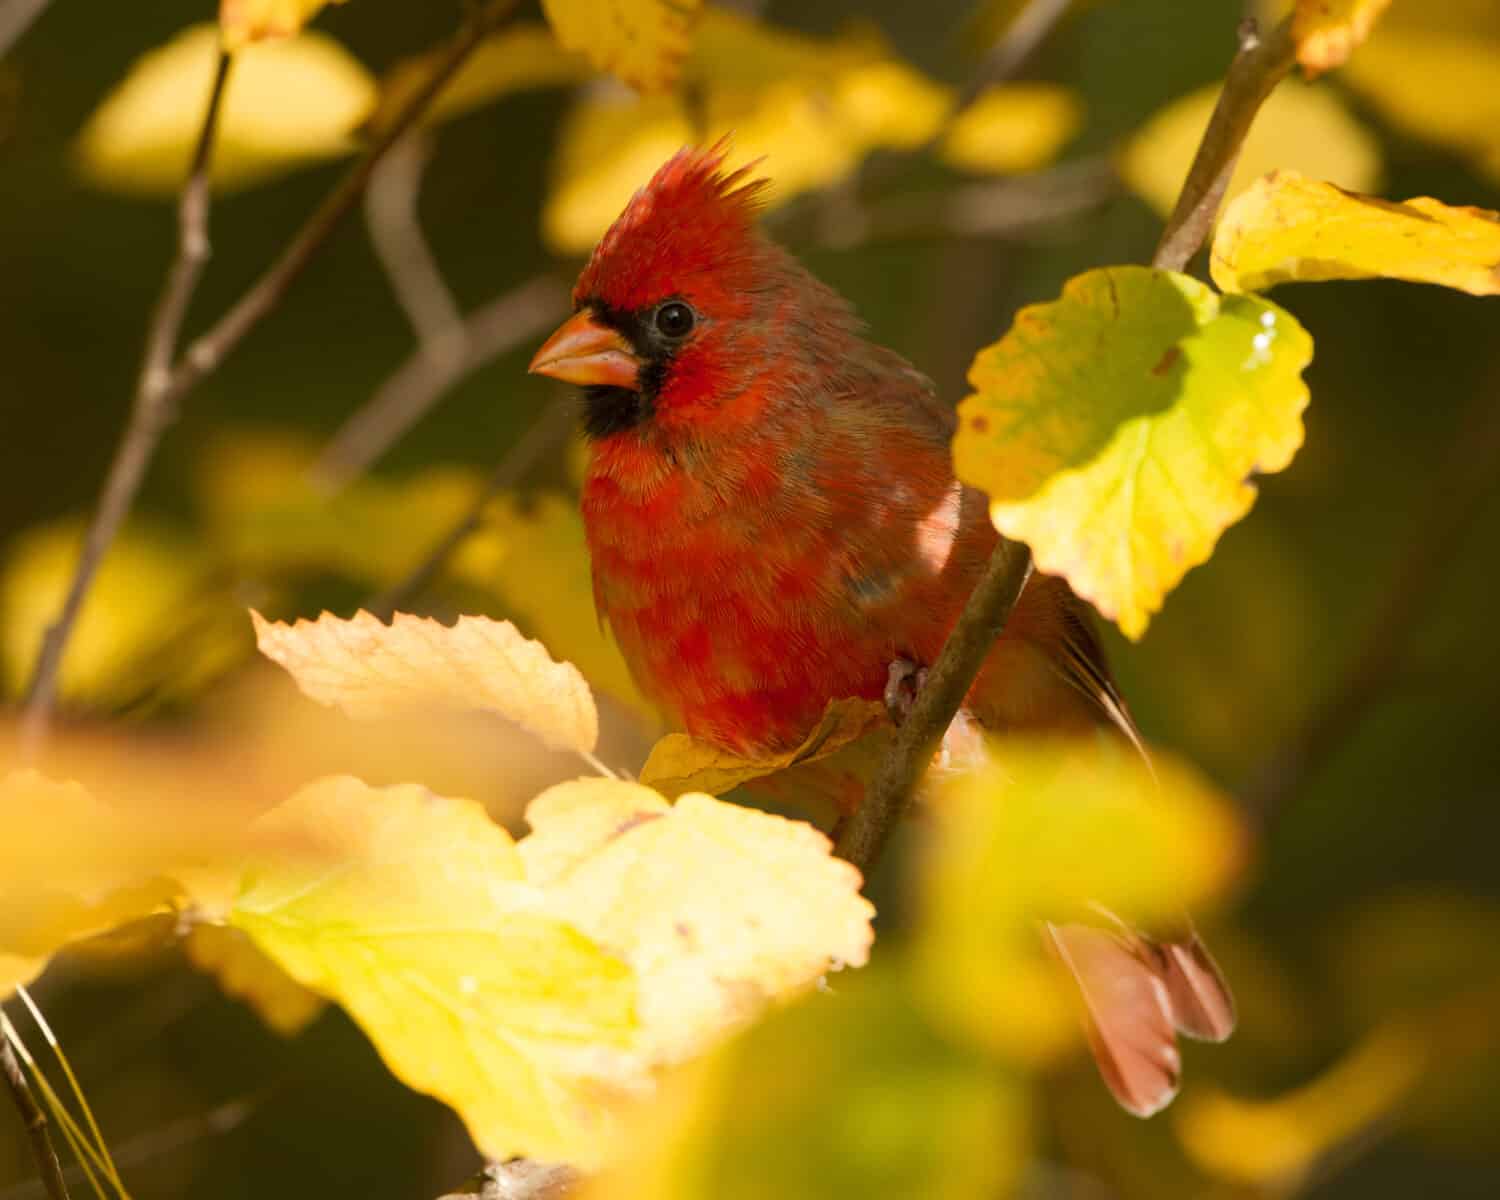 Northern Cardinal (Cardinalis cardinalis) perched in a Witch Hazel Shrub in Autumn - Ontario, Canada